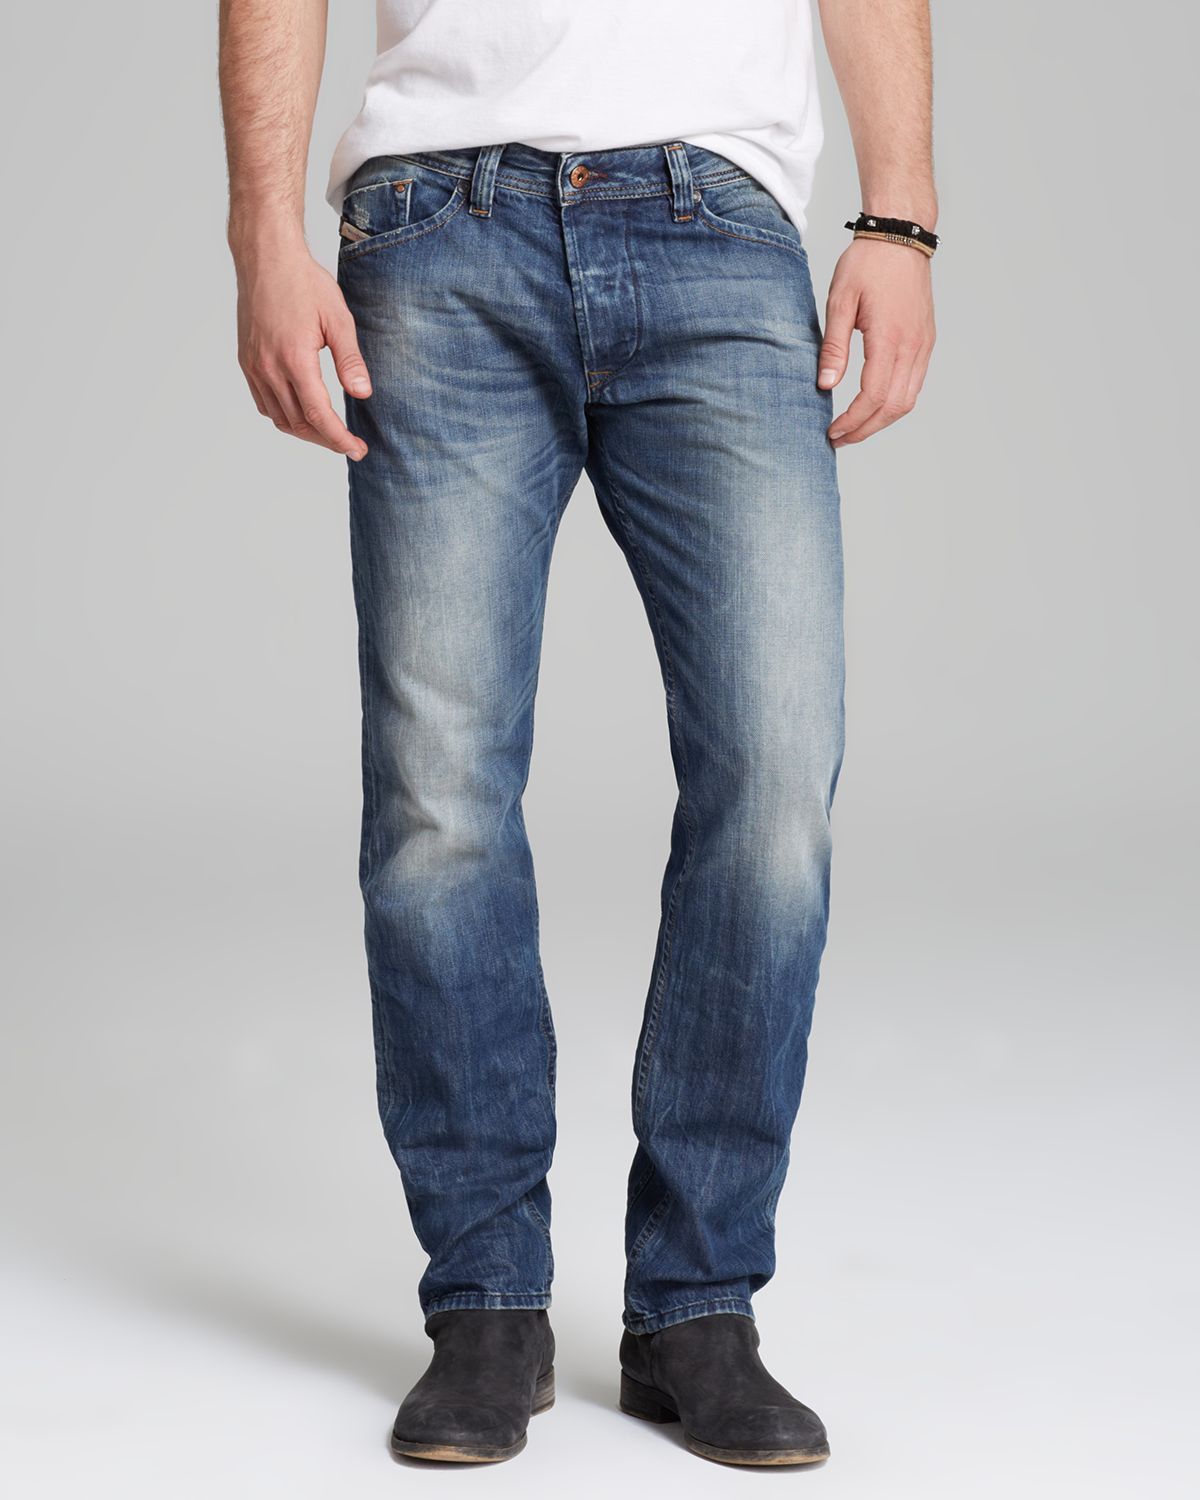 Lyst - Diesel Jeans Darron Slim Straight Fit in 814a for Men